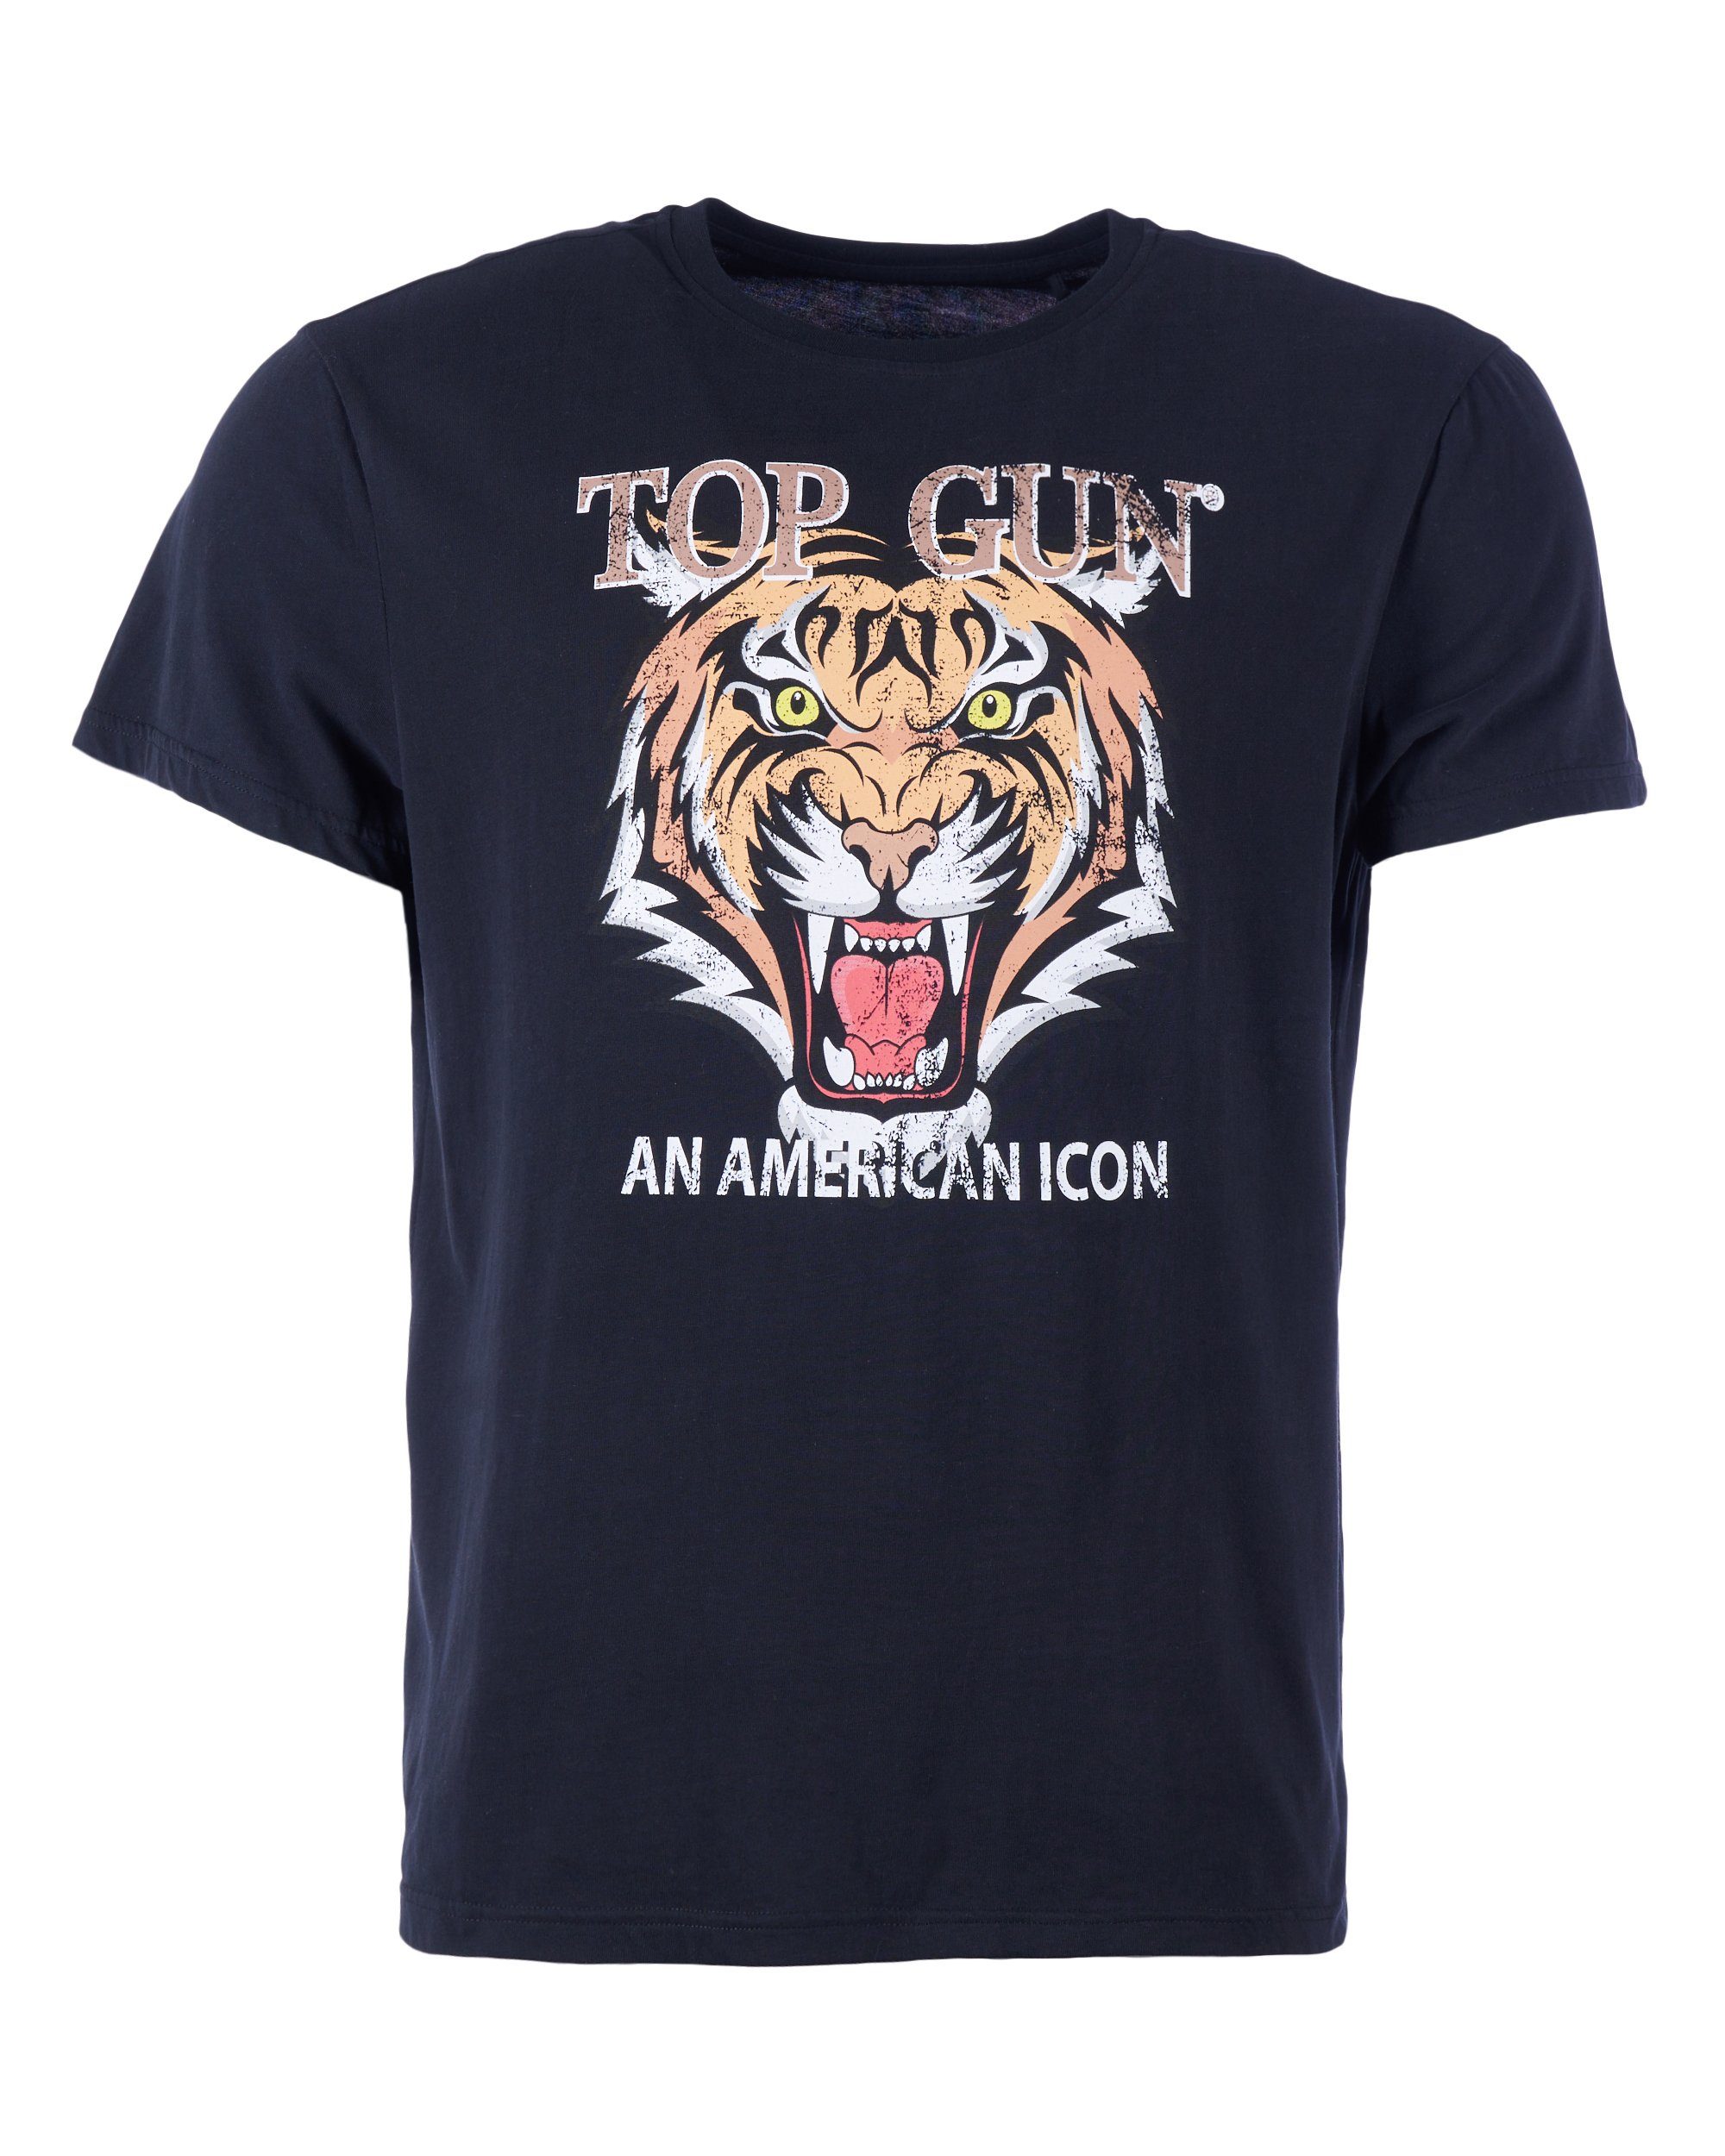 TOP GUN T-Shirt TG20213017 black